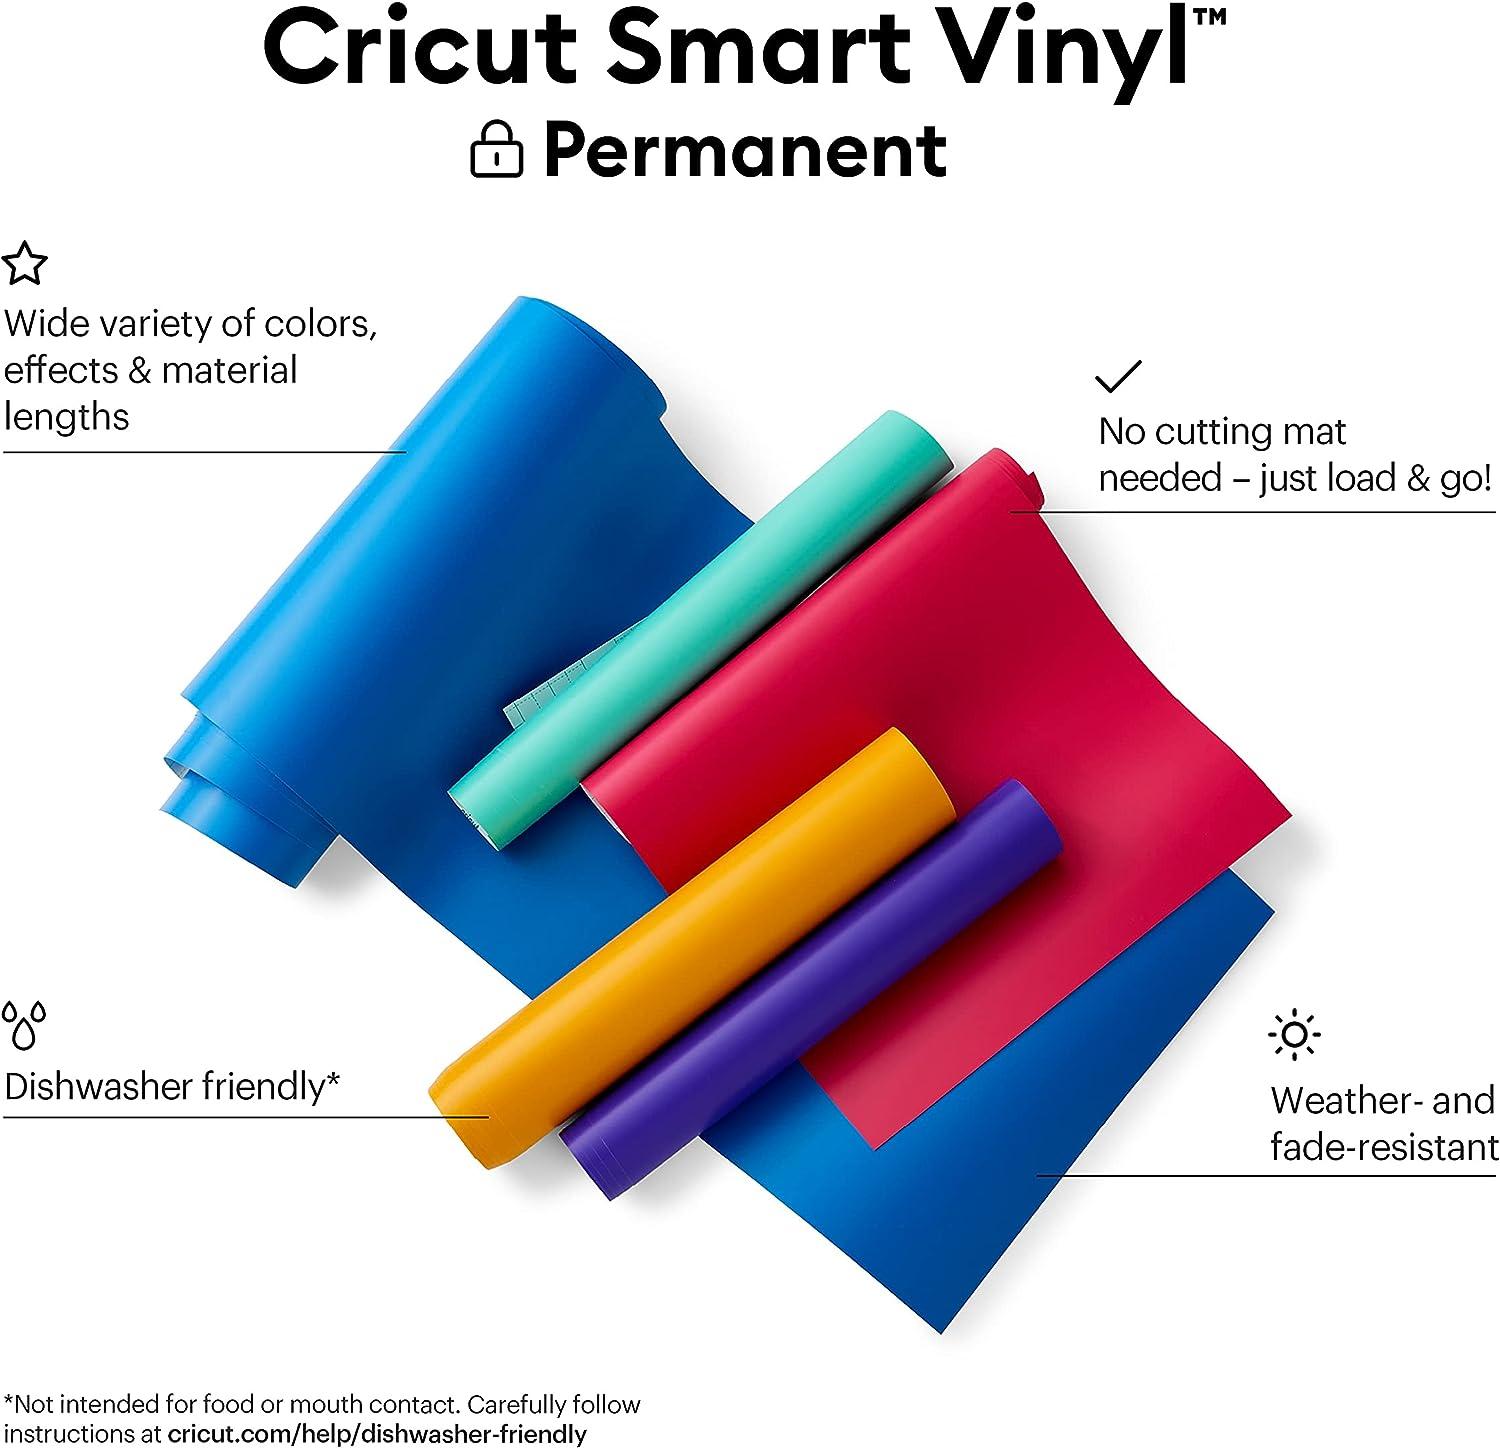 Cricut Smart Vinyl Matte Metallic Permanent Roll (25 in x 5 ft)